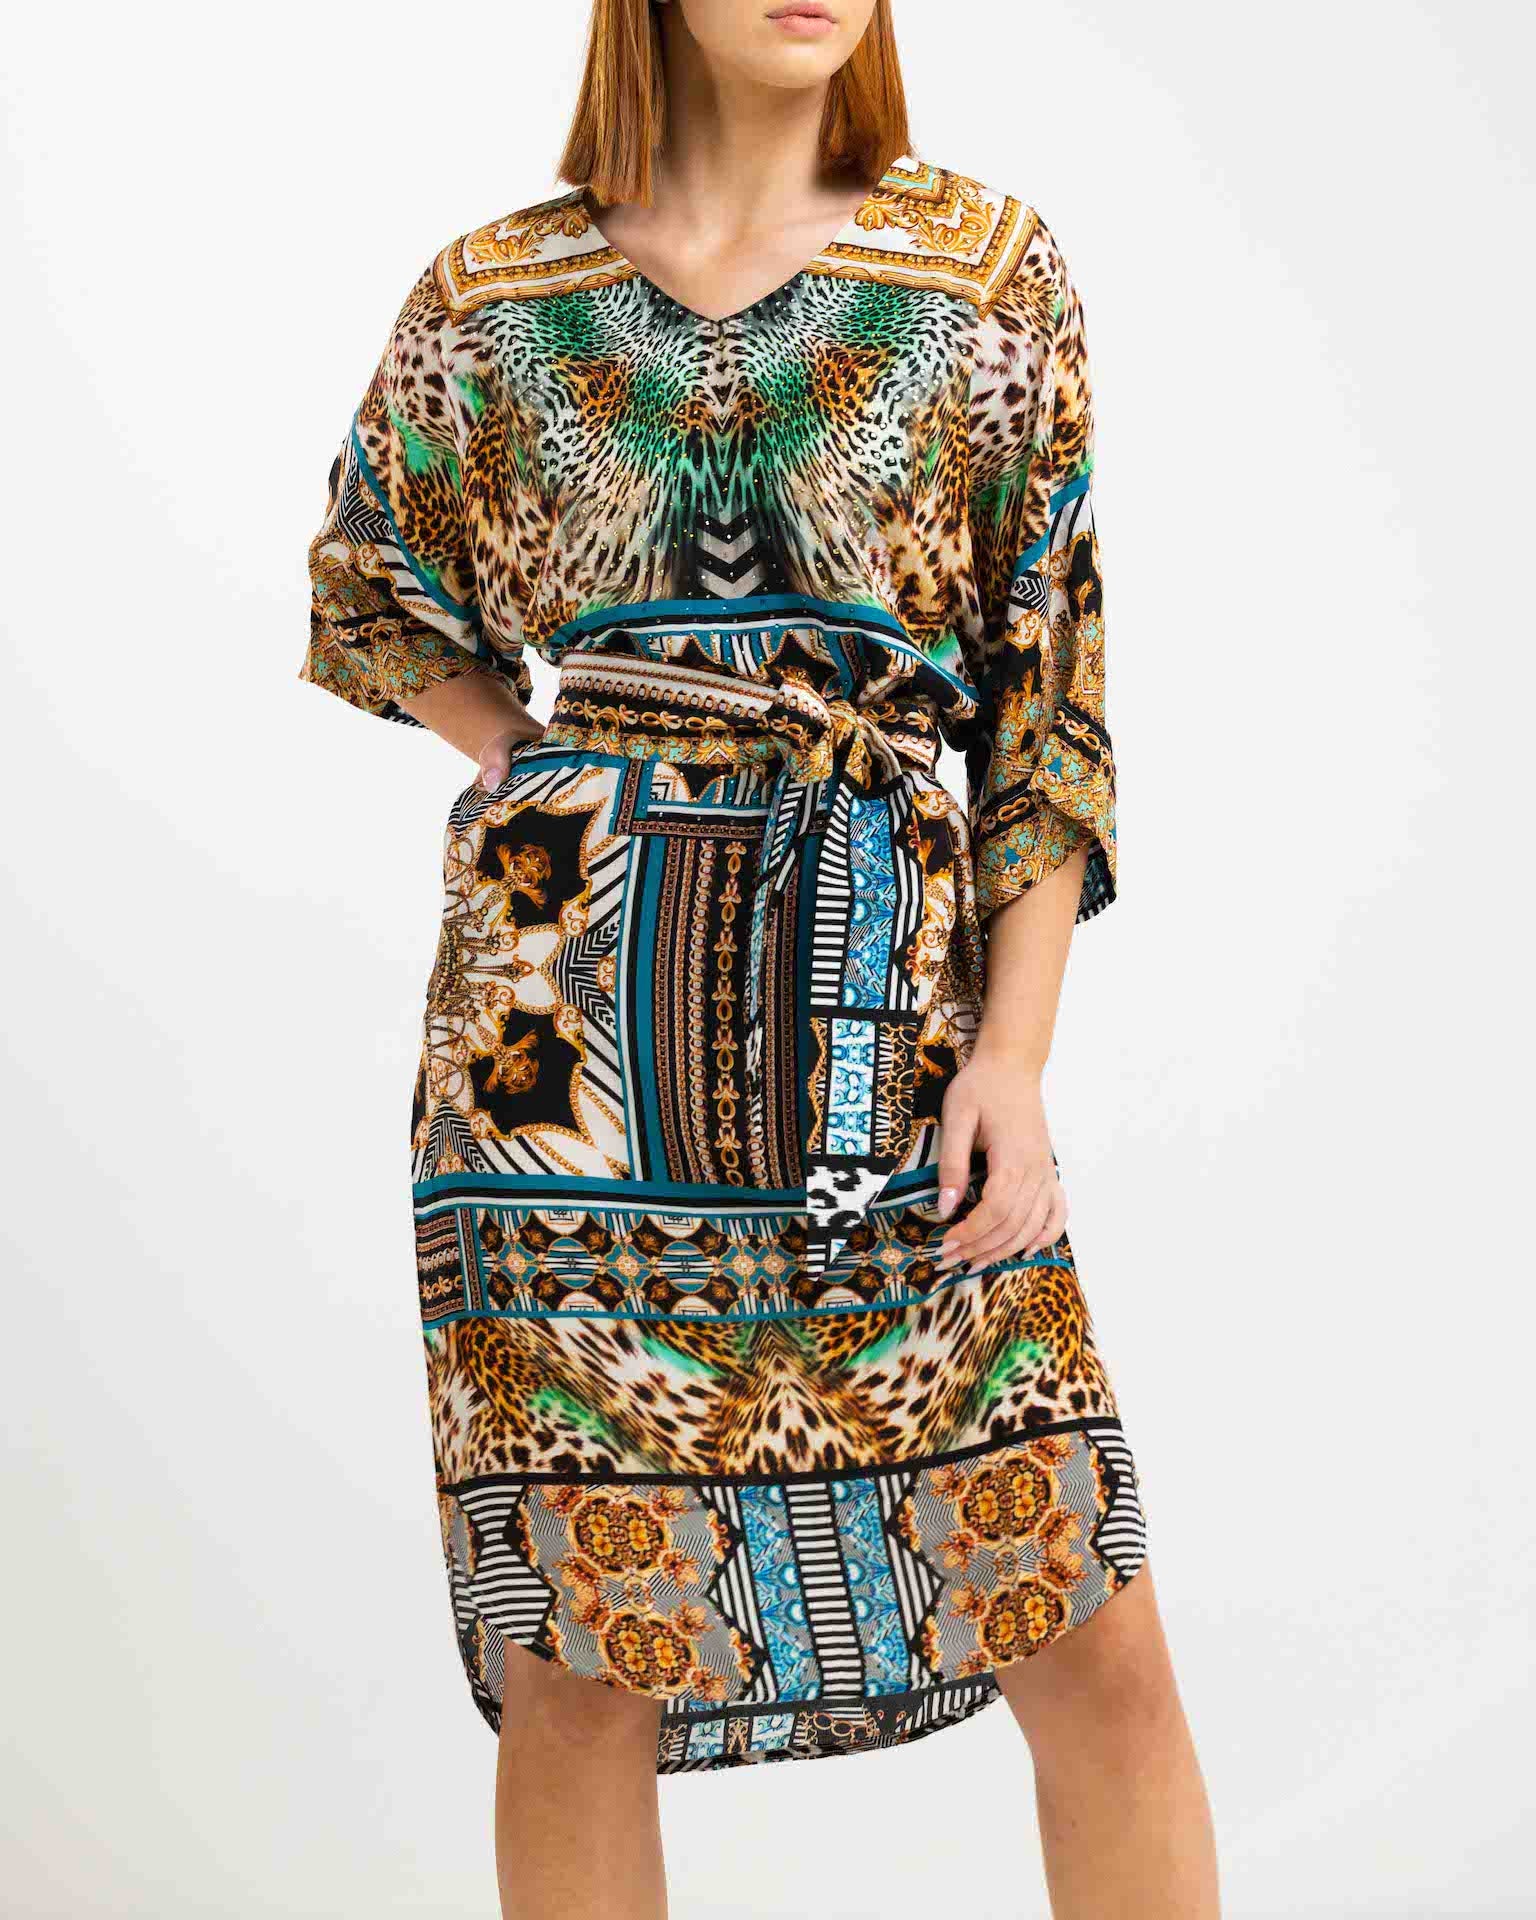 INOA Silk Fish Dress - Samsara